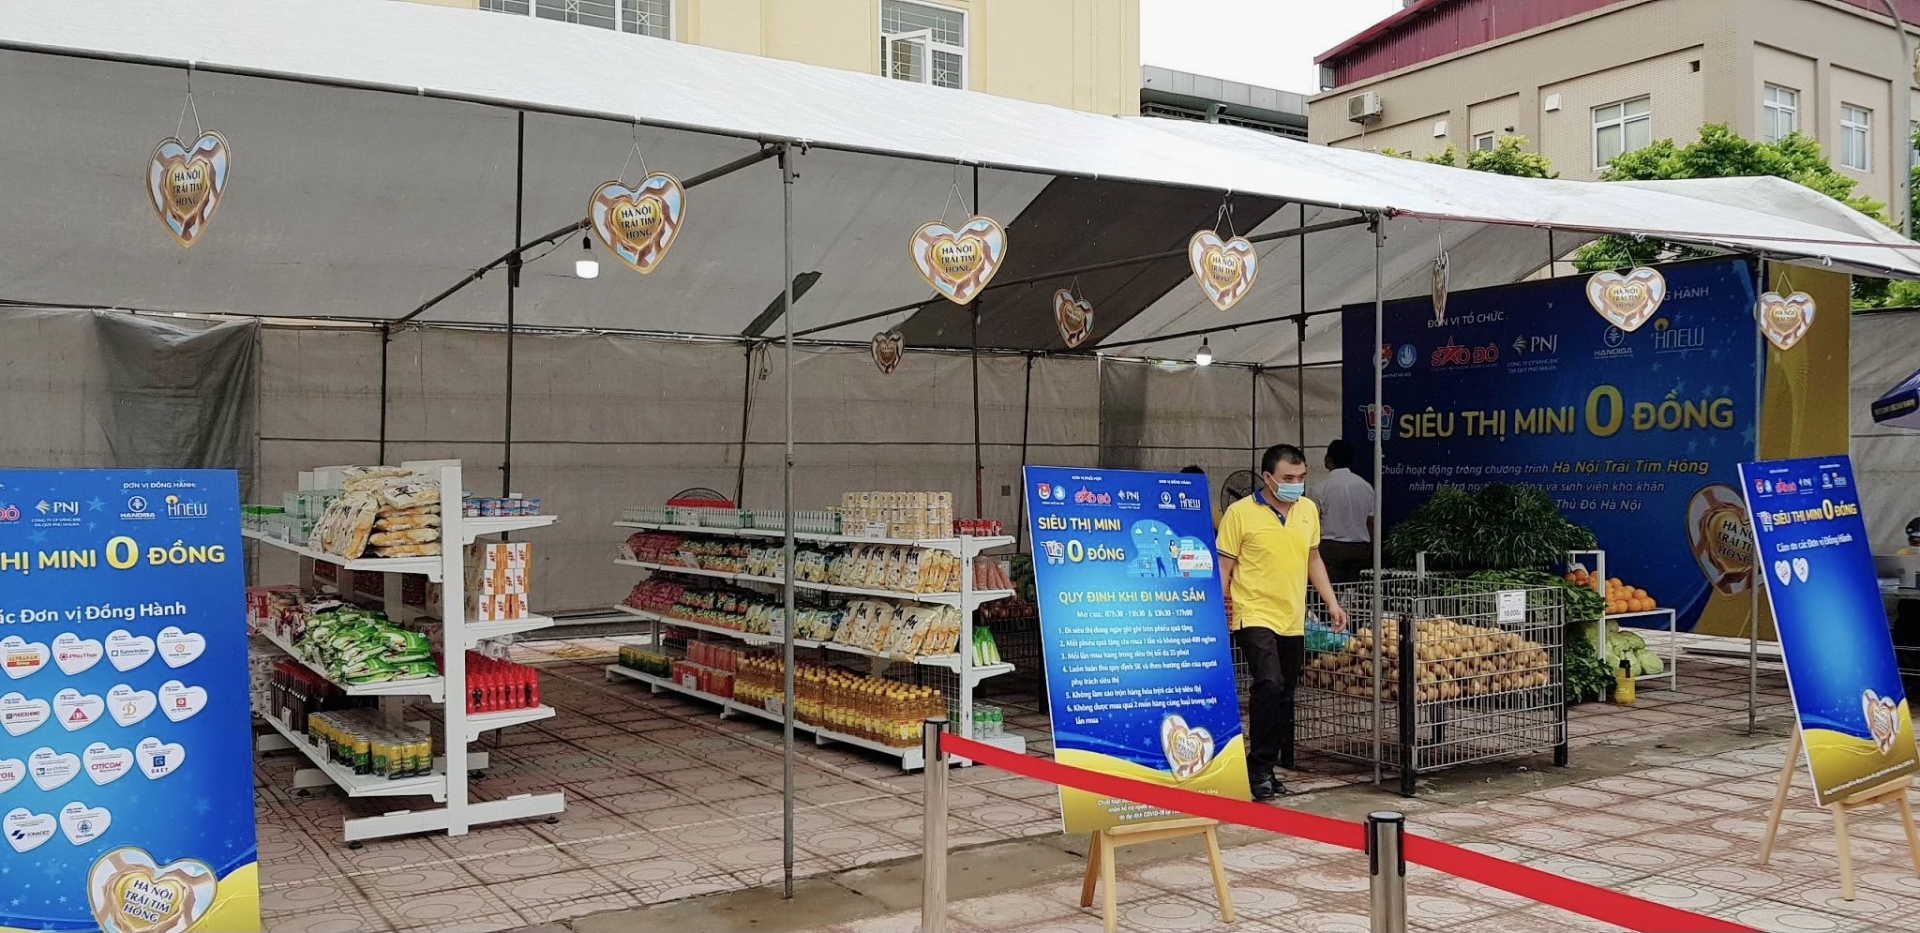 Zero dong minimarts open to support the poor in Hanoi